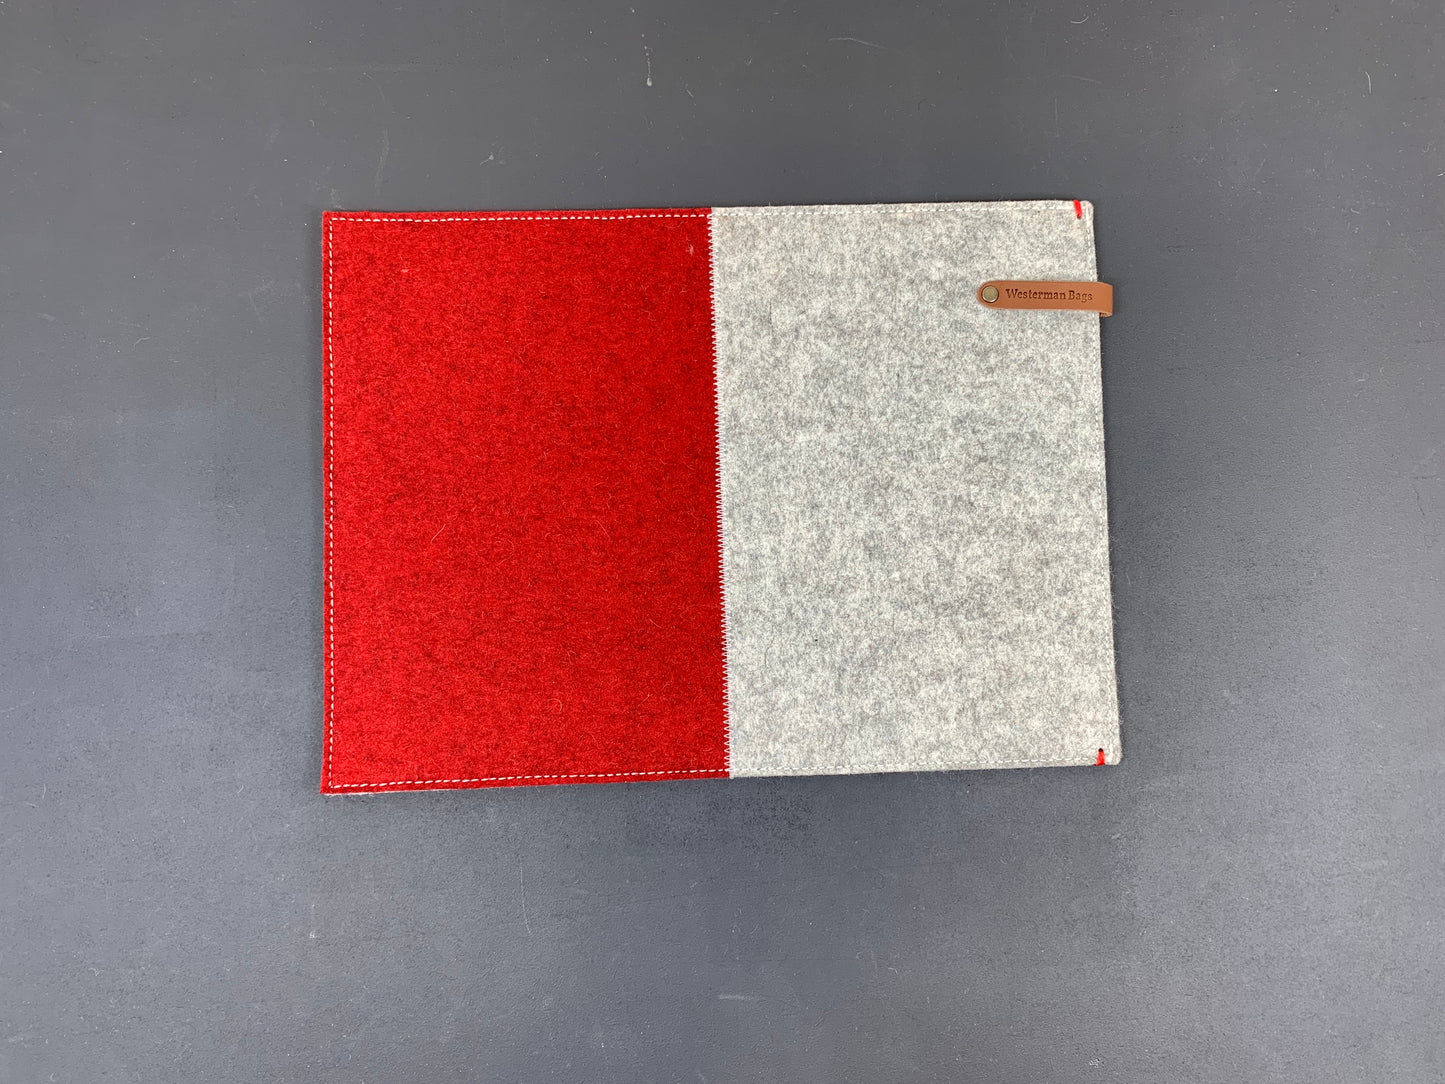 Wool felt macbook case in red and grey